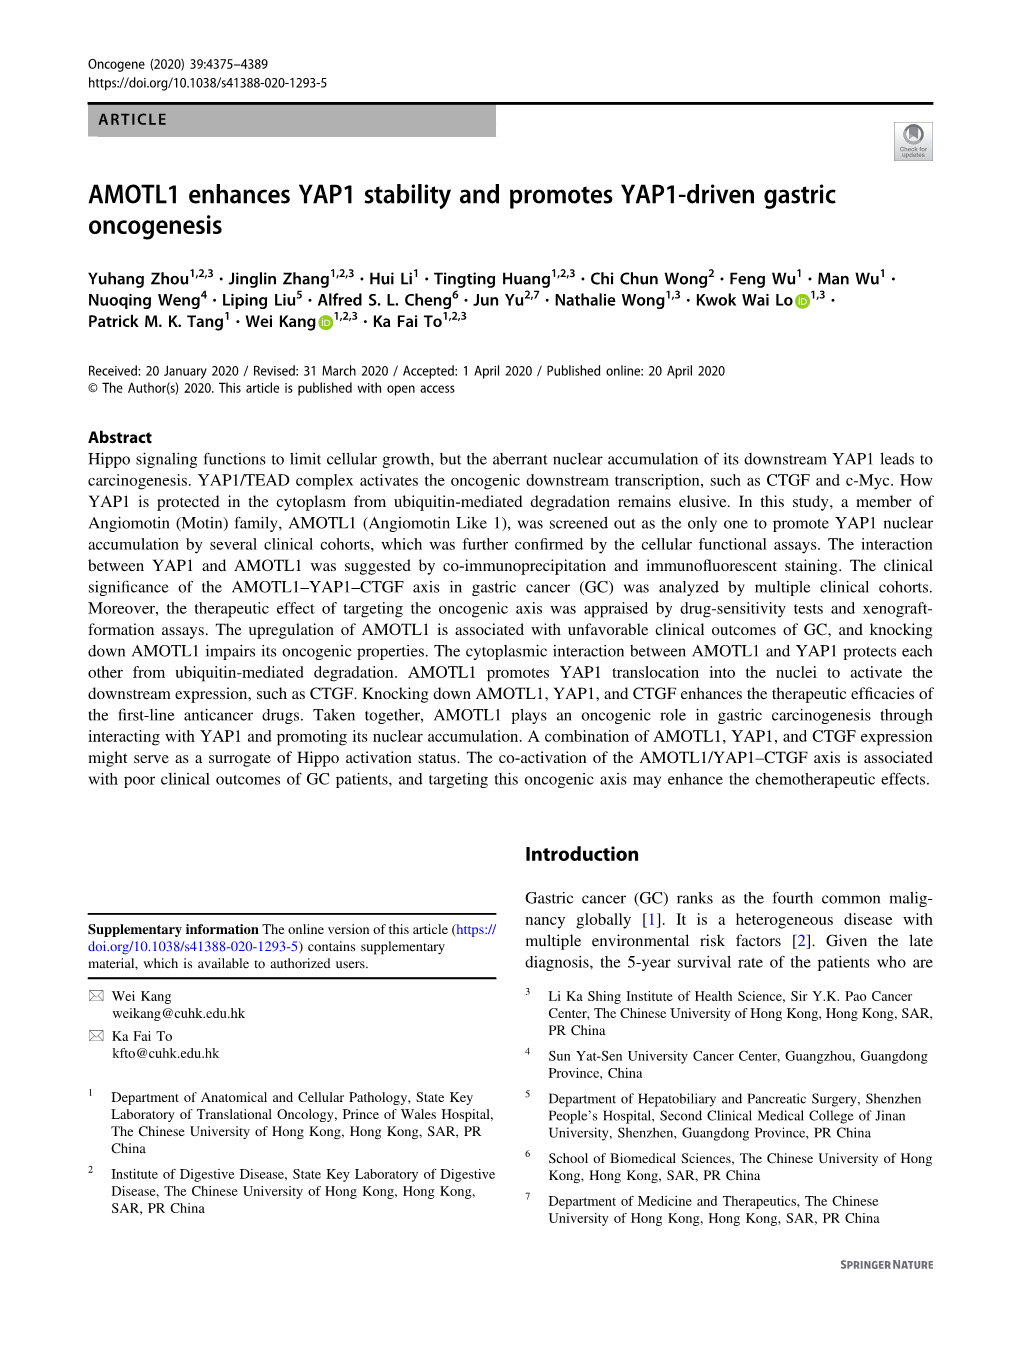 AMOTL1 Enhances YAP1 Stability and Promotes YAP1-Driven Gastric Oncogenesis